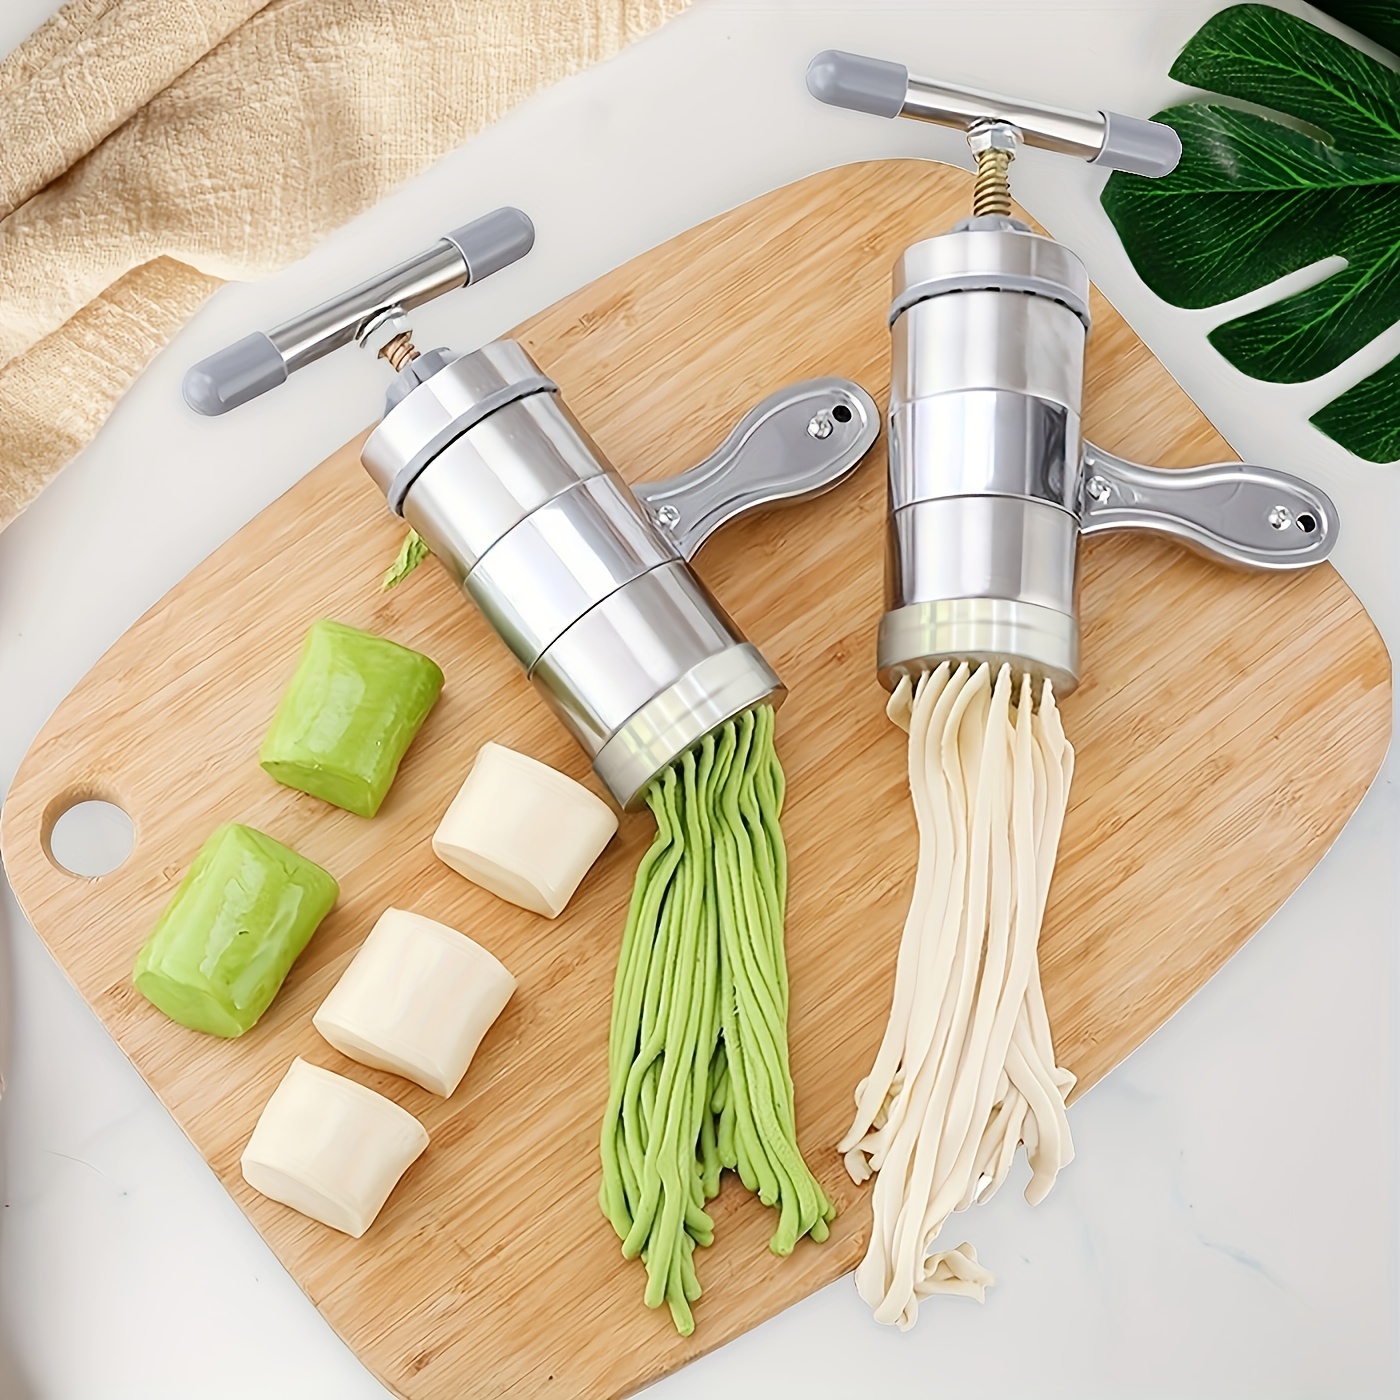 Handheld Noodle Press Gun Cordless Portable Pasta Noodle Maker USB Charging  Utility Kitchen Gadget